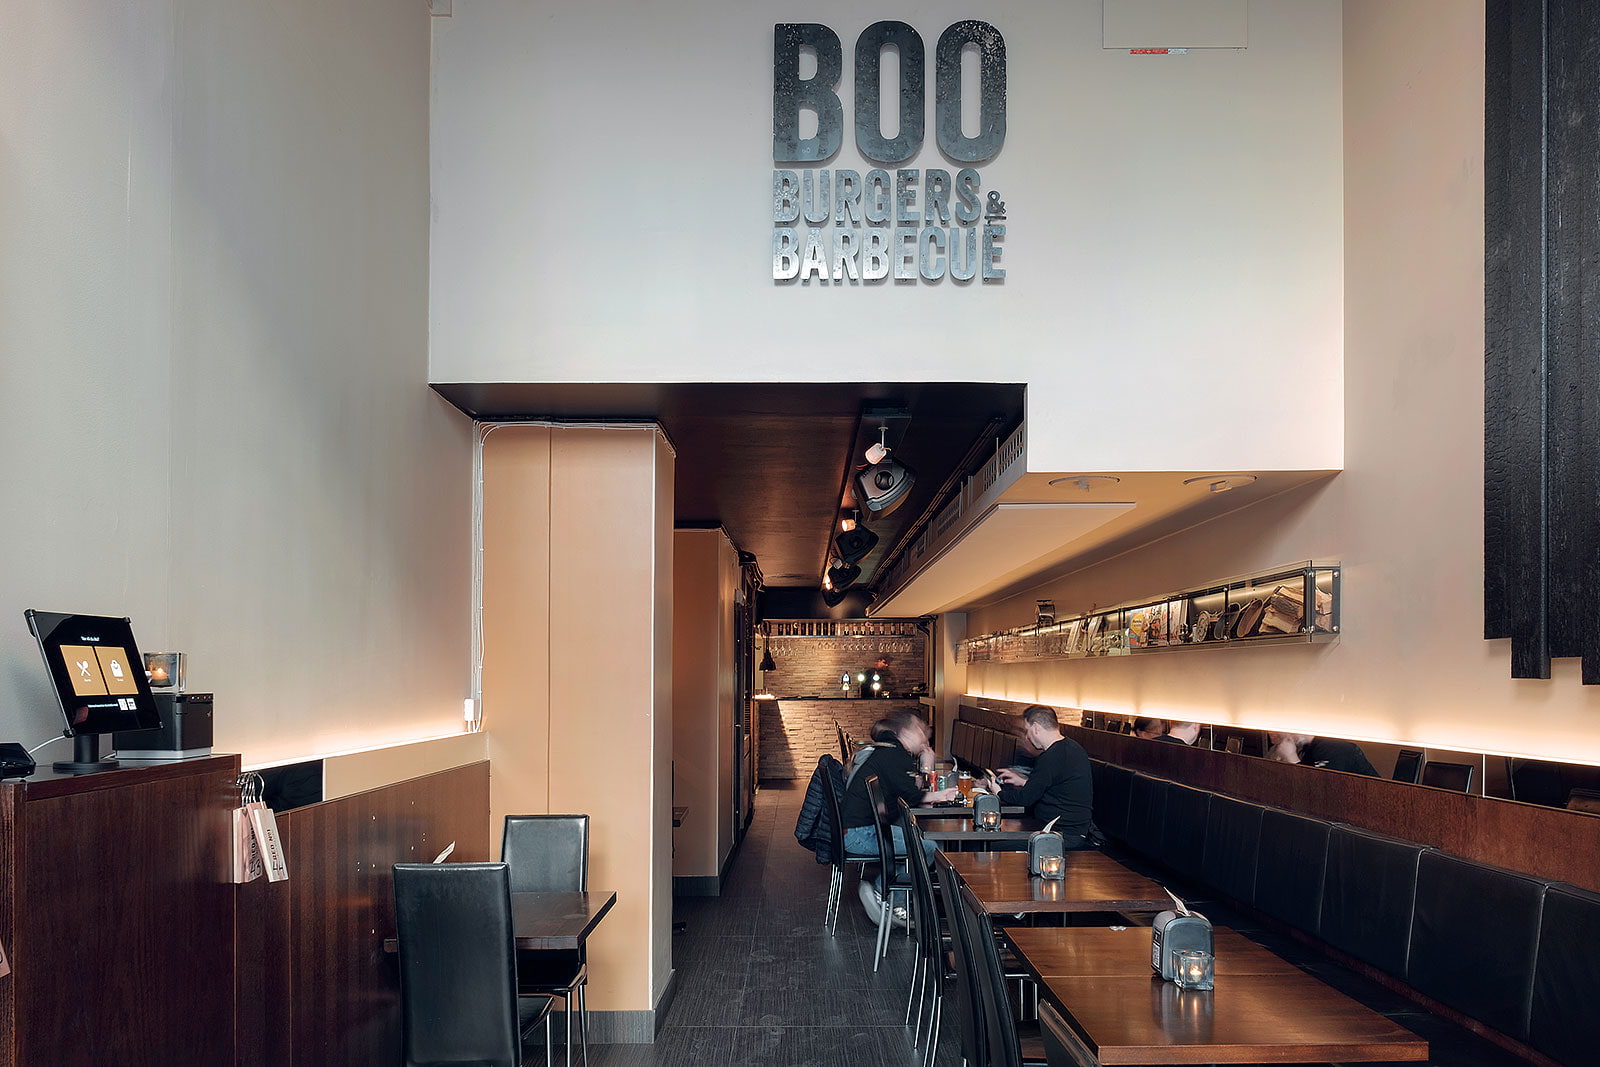 BOO Burgers & Barbecue Södermalm – Köttkrogar